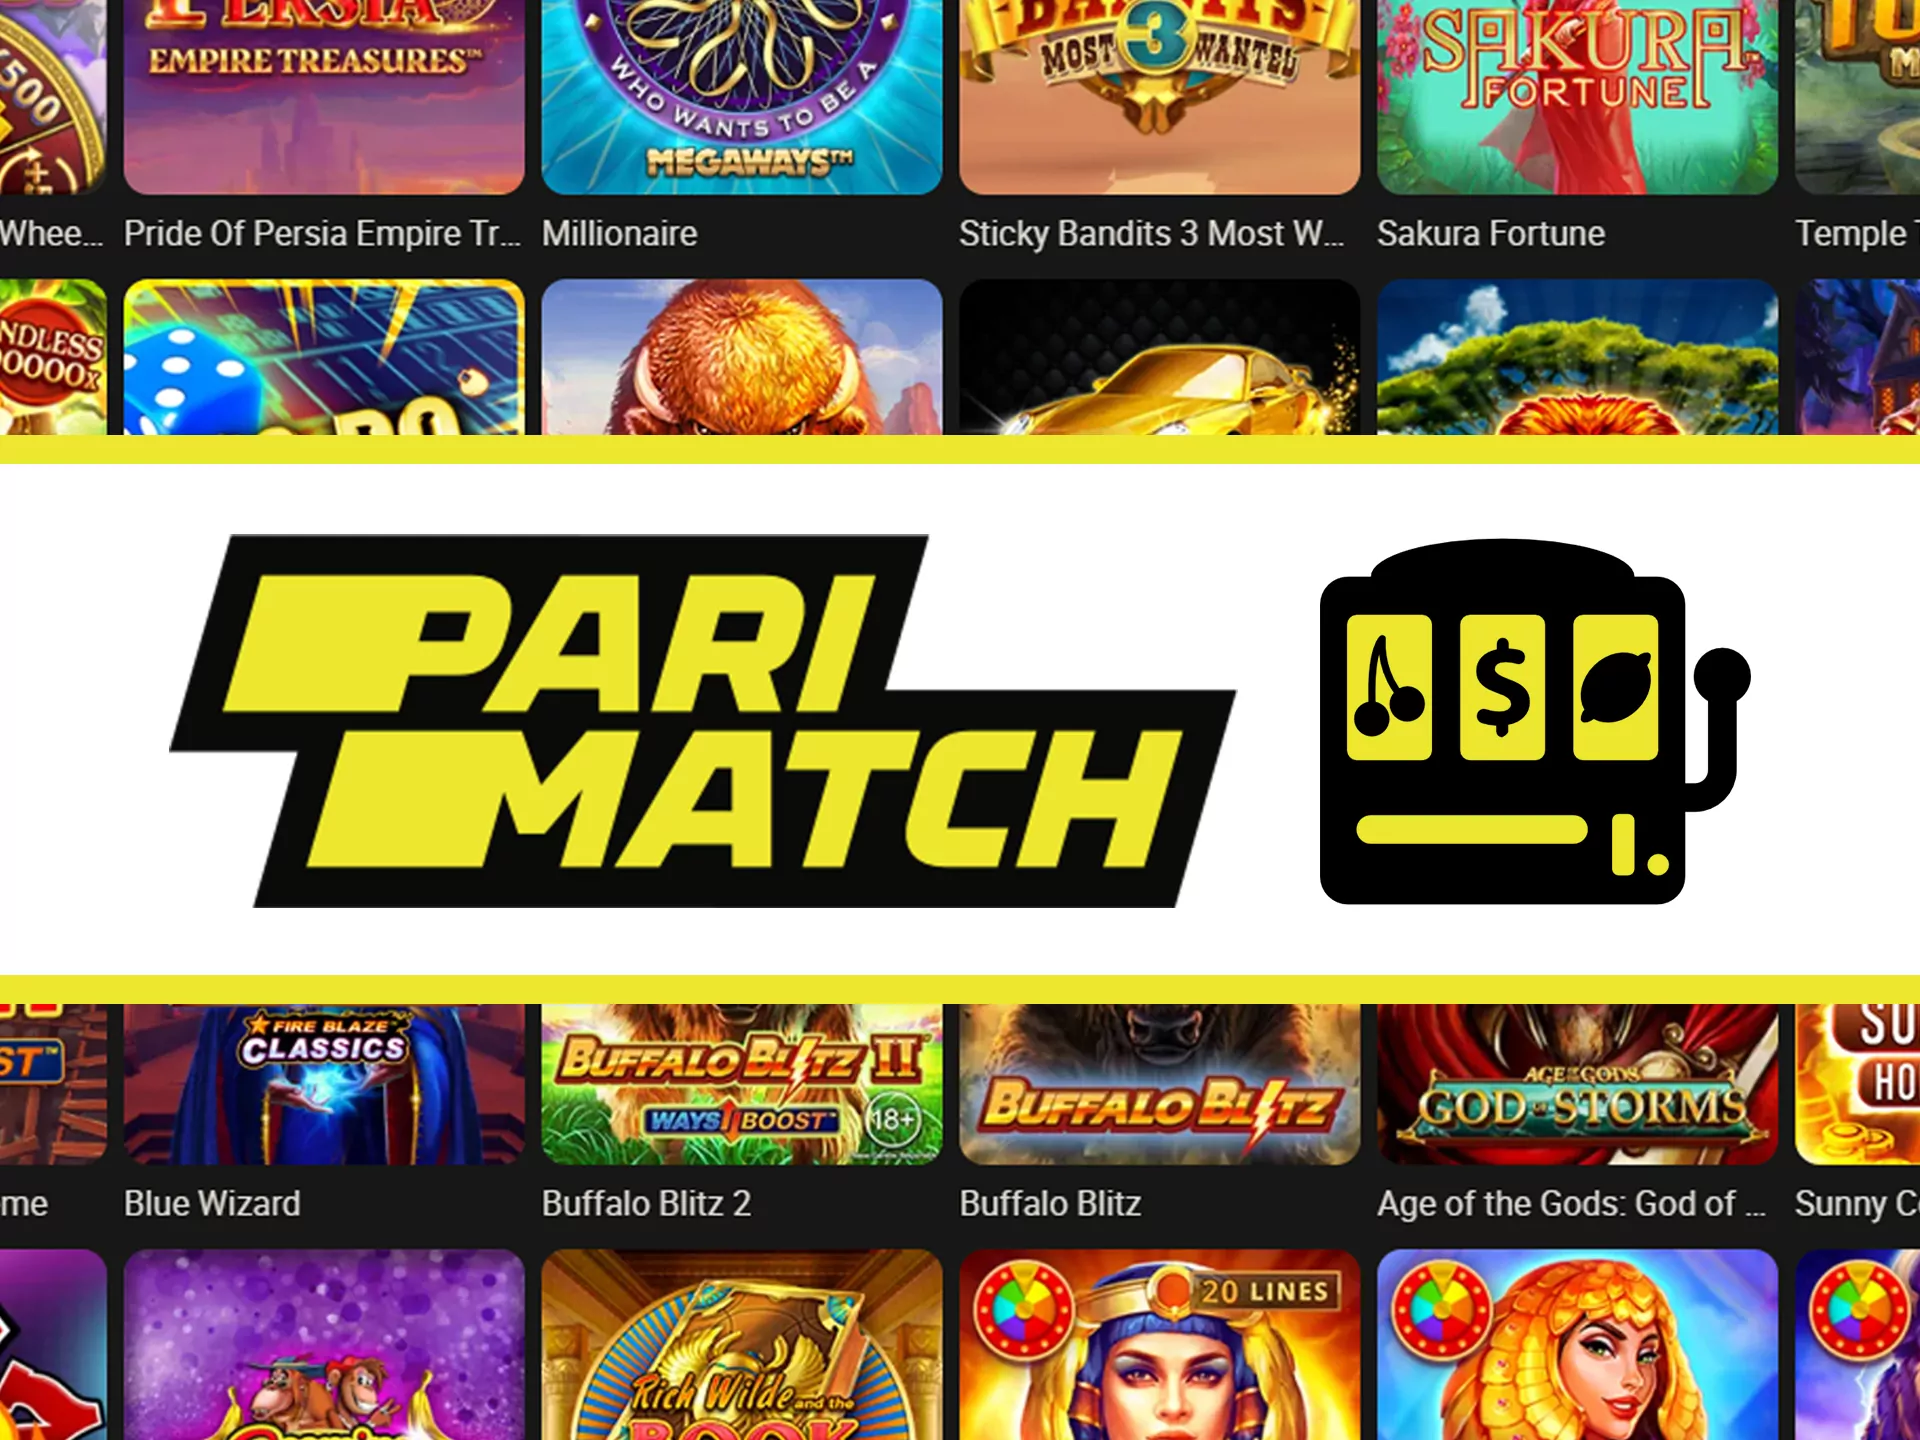 Play Parimatch casino games.